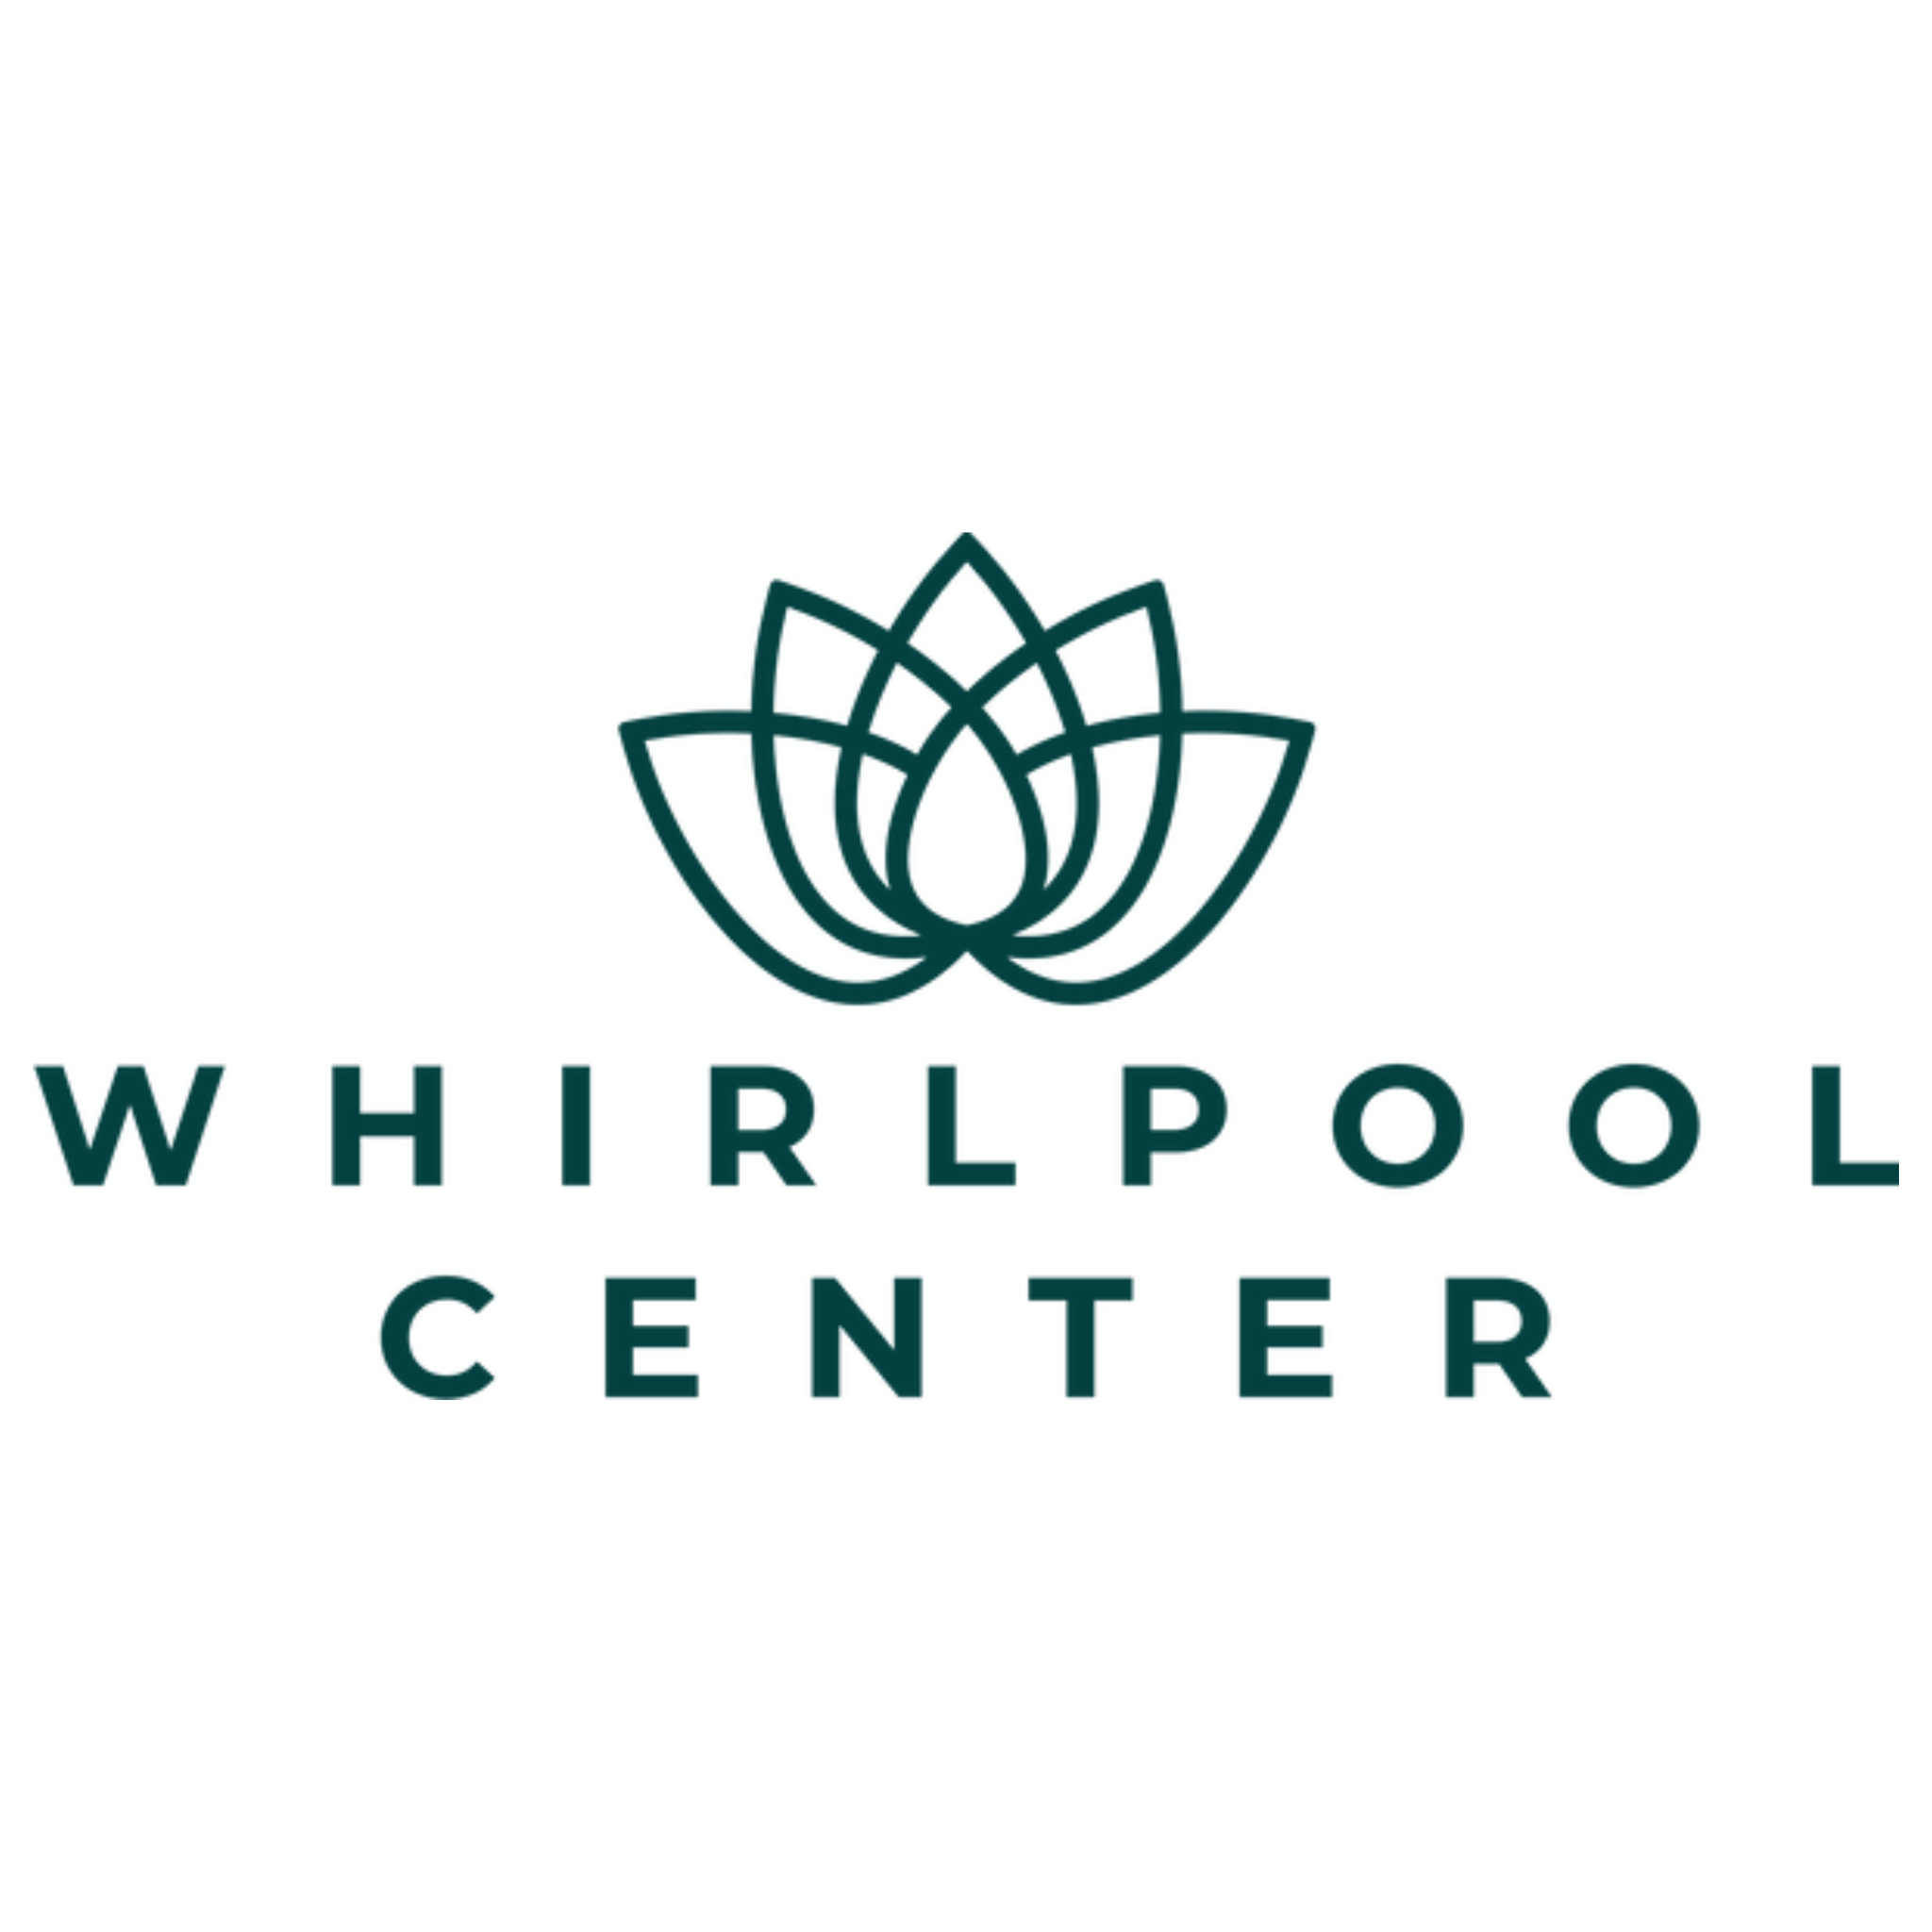 Whirlpool Center in Mülheim an der Ruhr - Logo